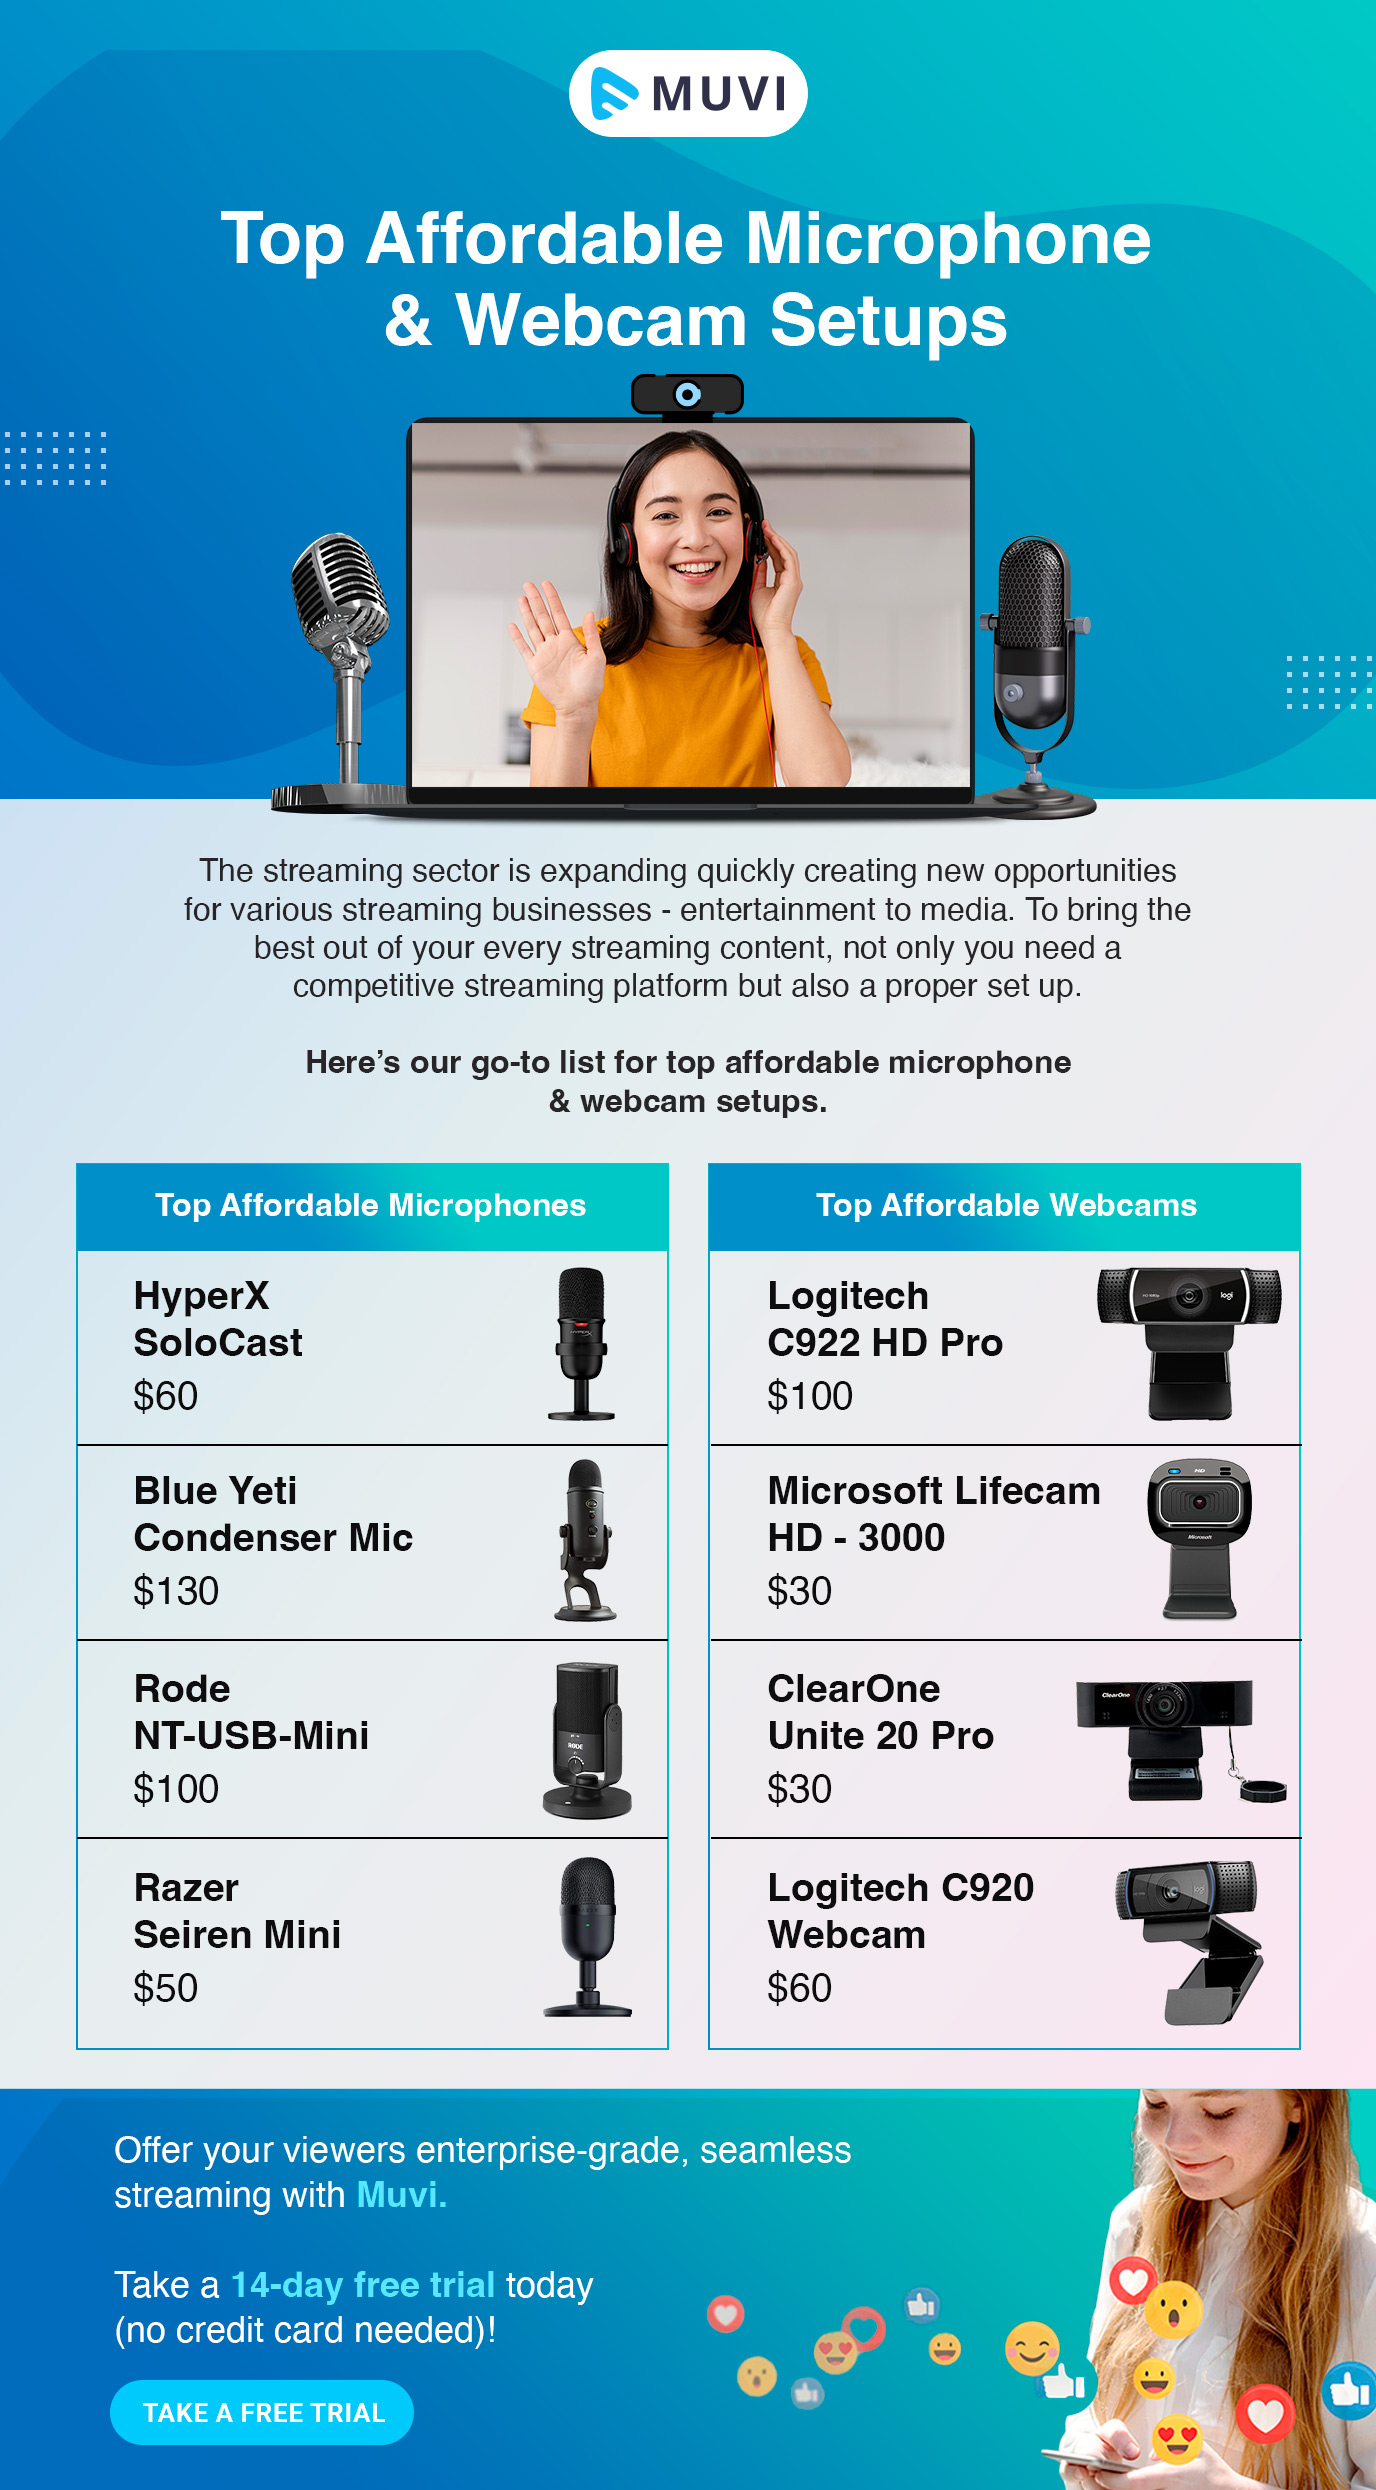 Top affordable microphone & webcam setups